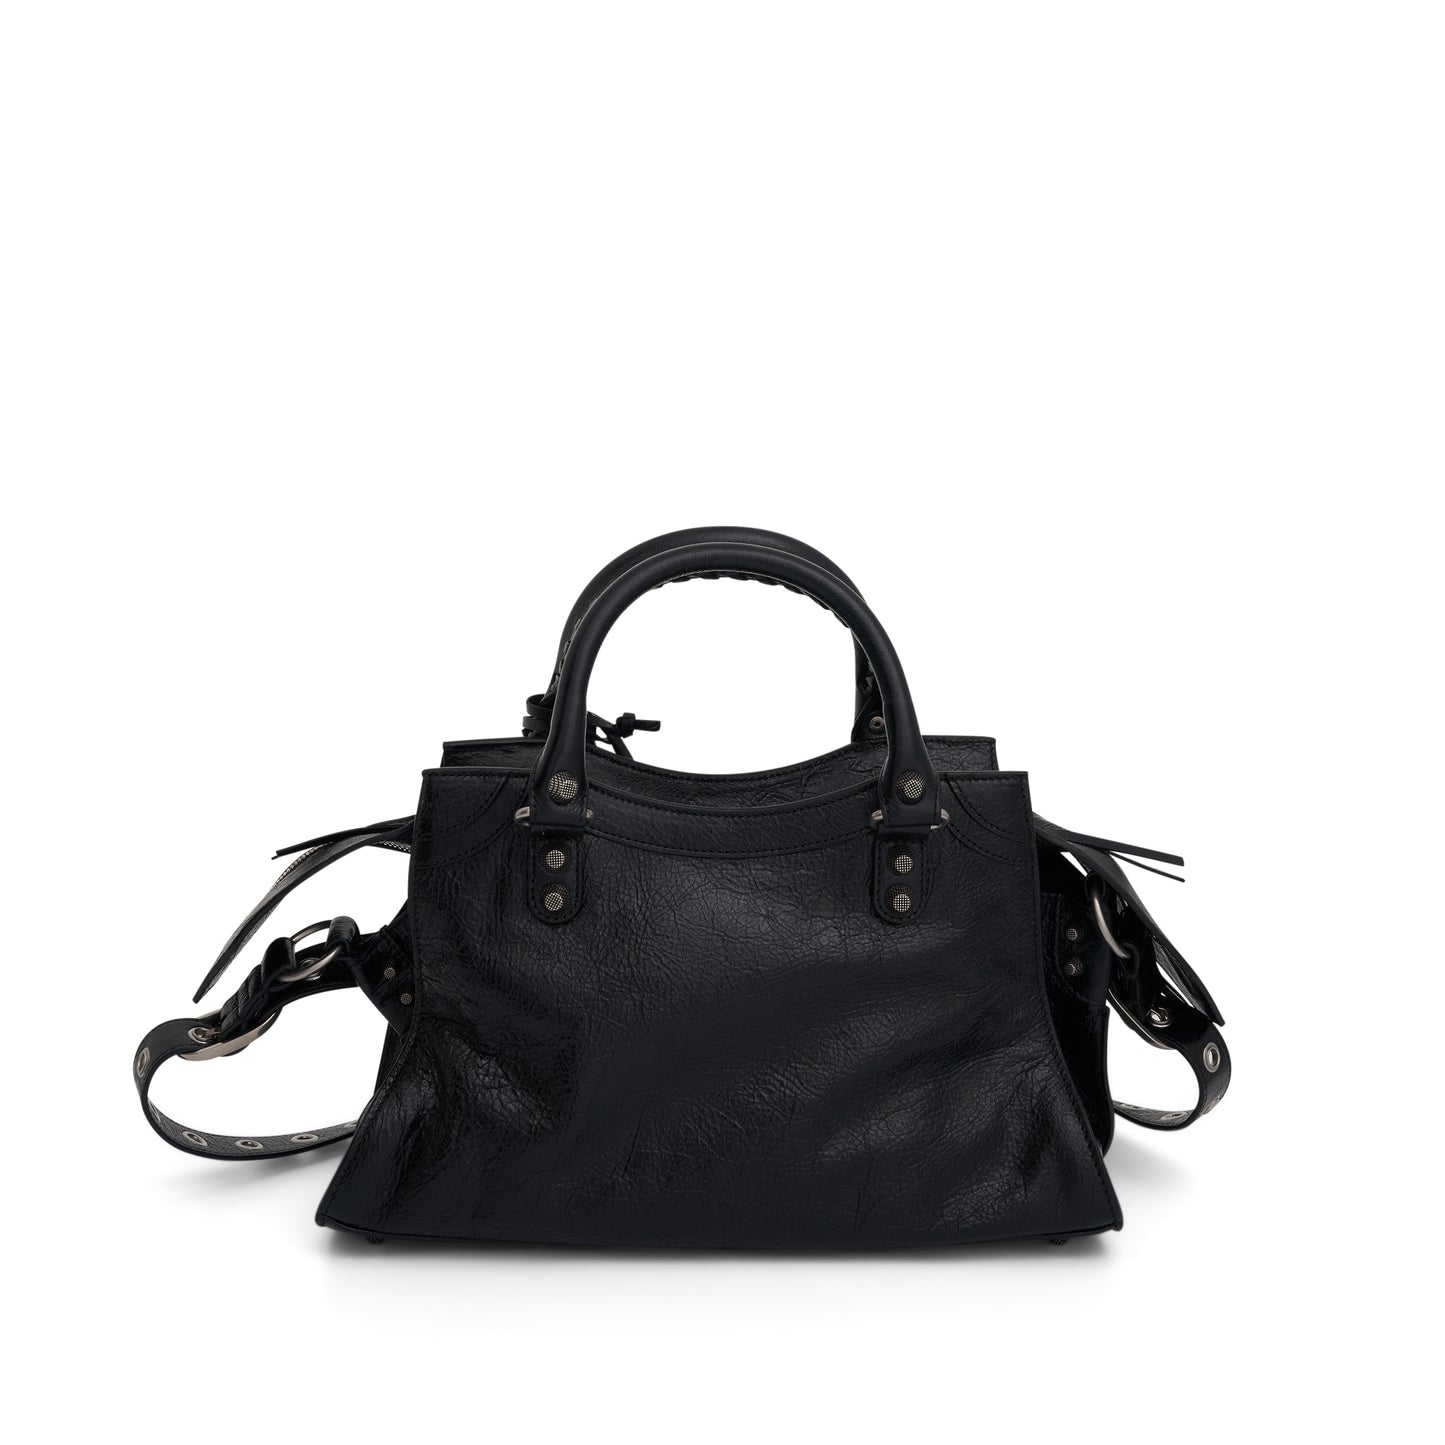 Neo Cagole City Small Handbag in Black